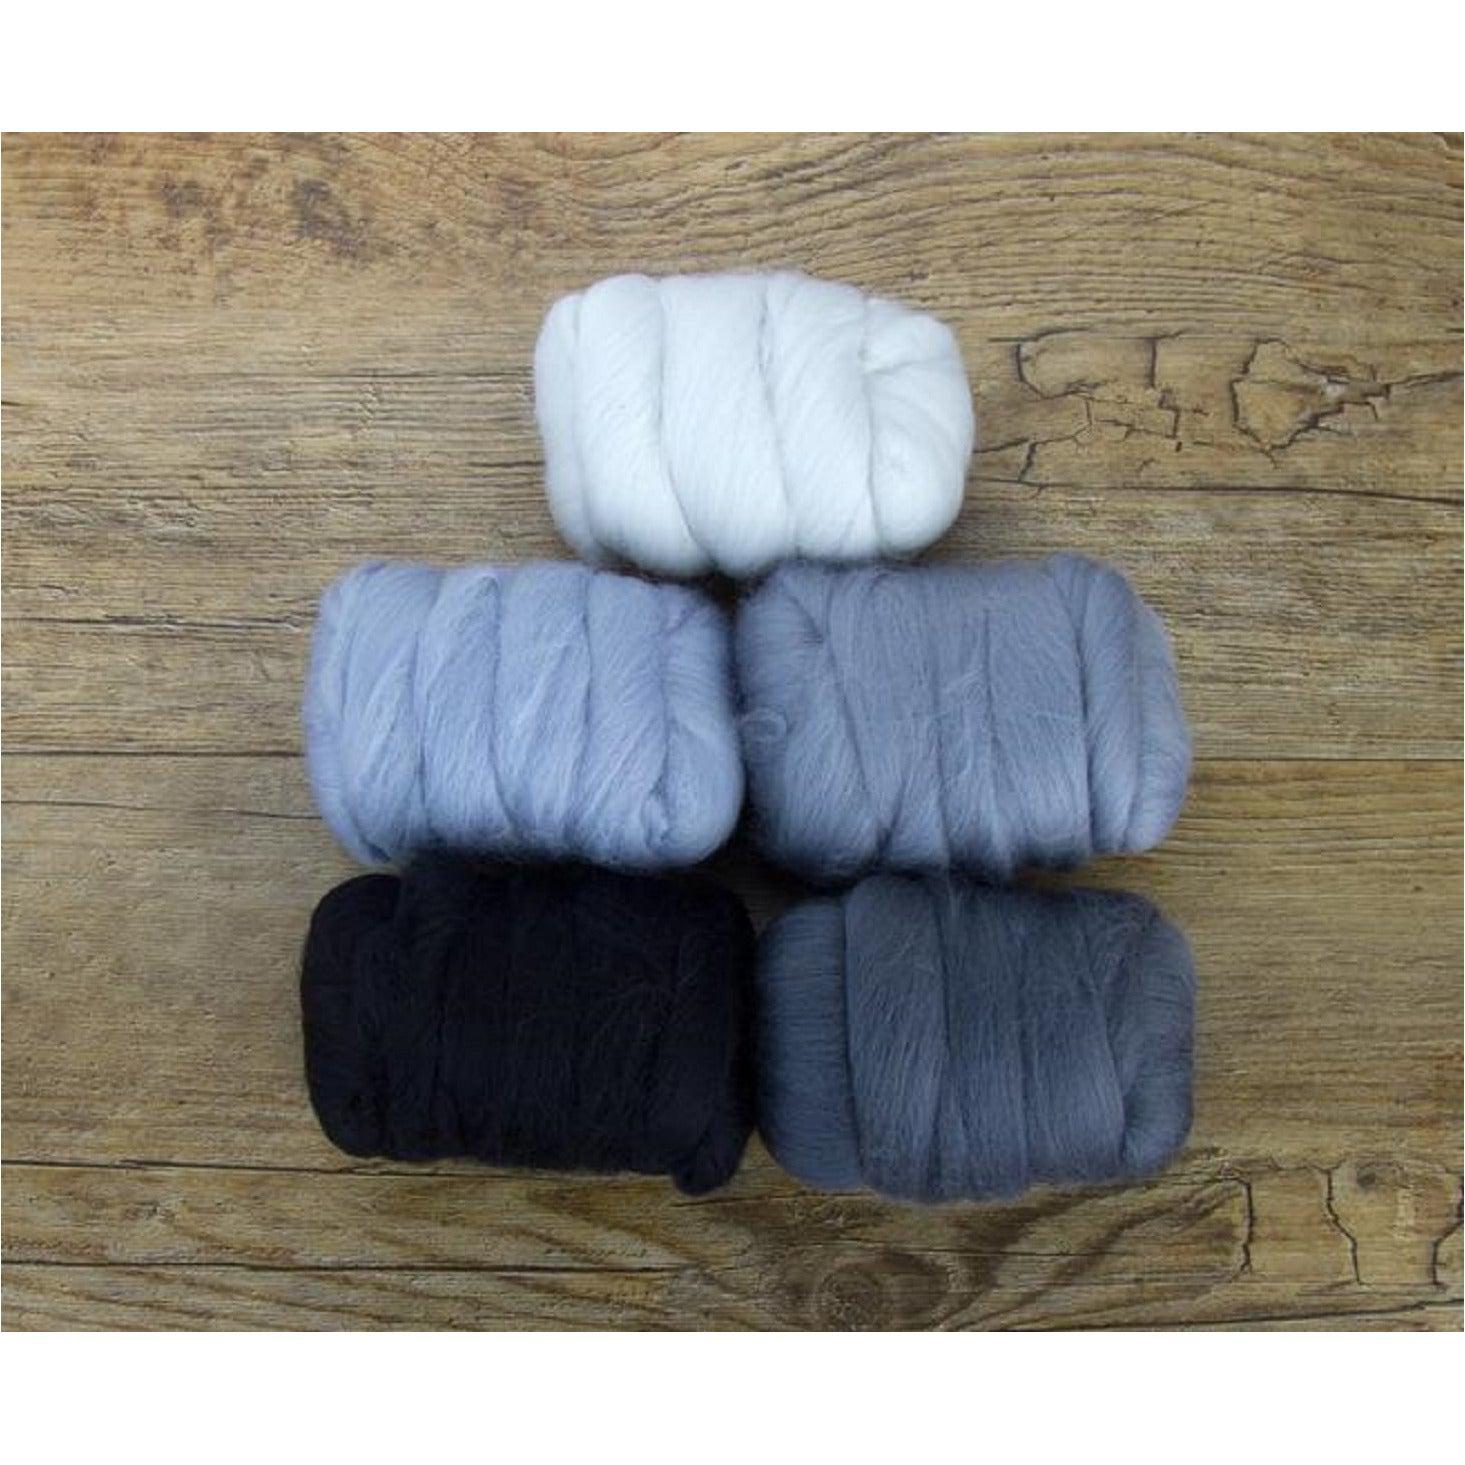 Mixed Merino Wool Variety Pack | Hazy Gray (Grays) 250 Grams, 23 Micron-Wool Roving-Revolution Fibers-Revolution Fibers